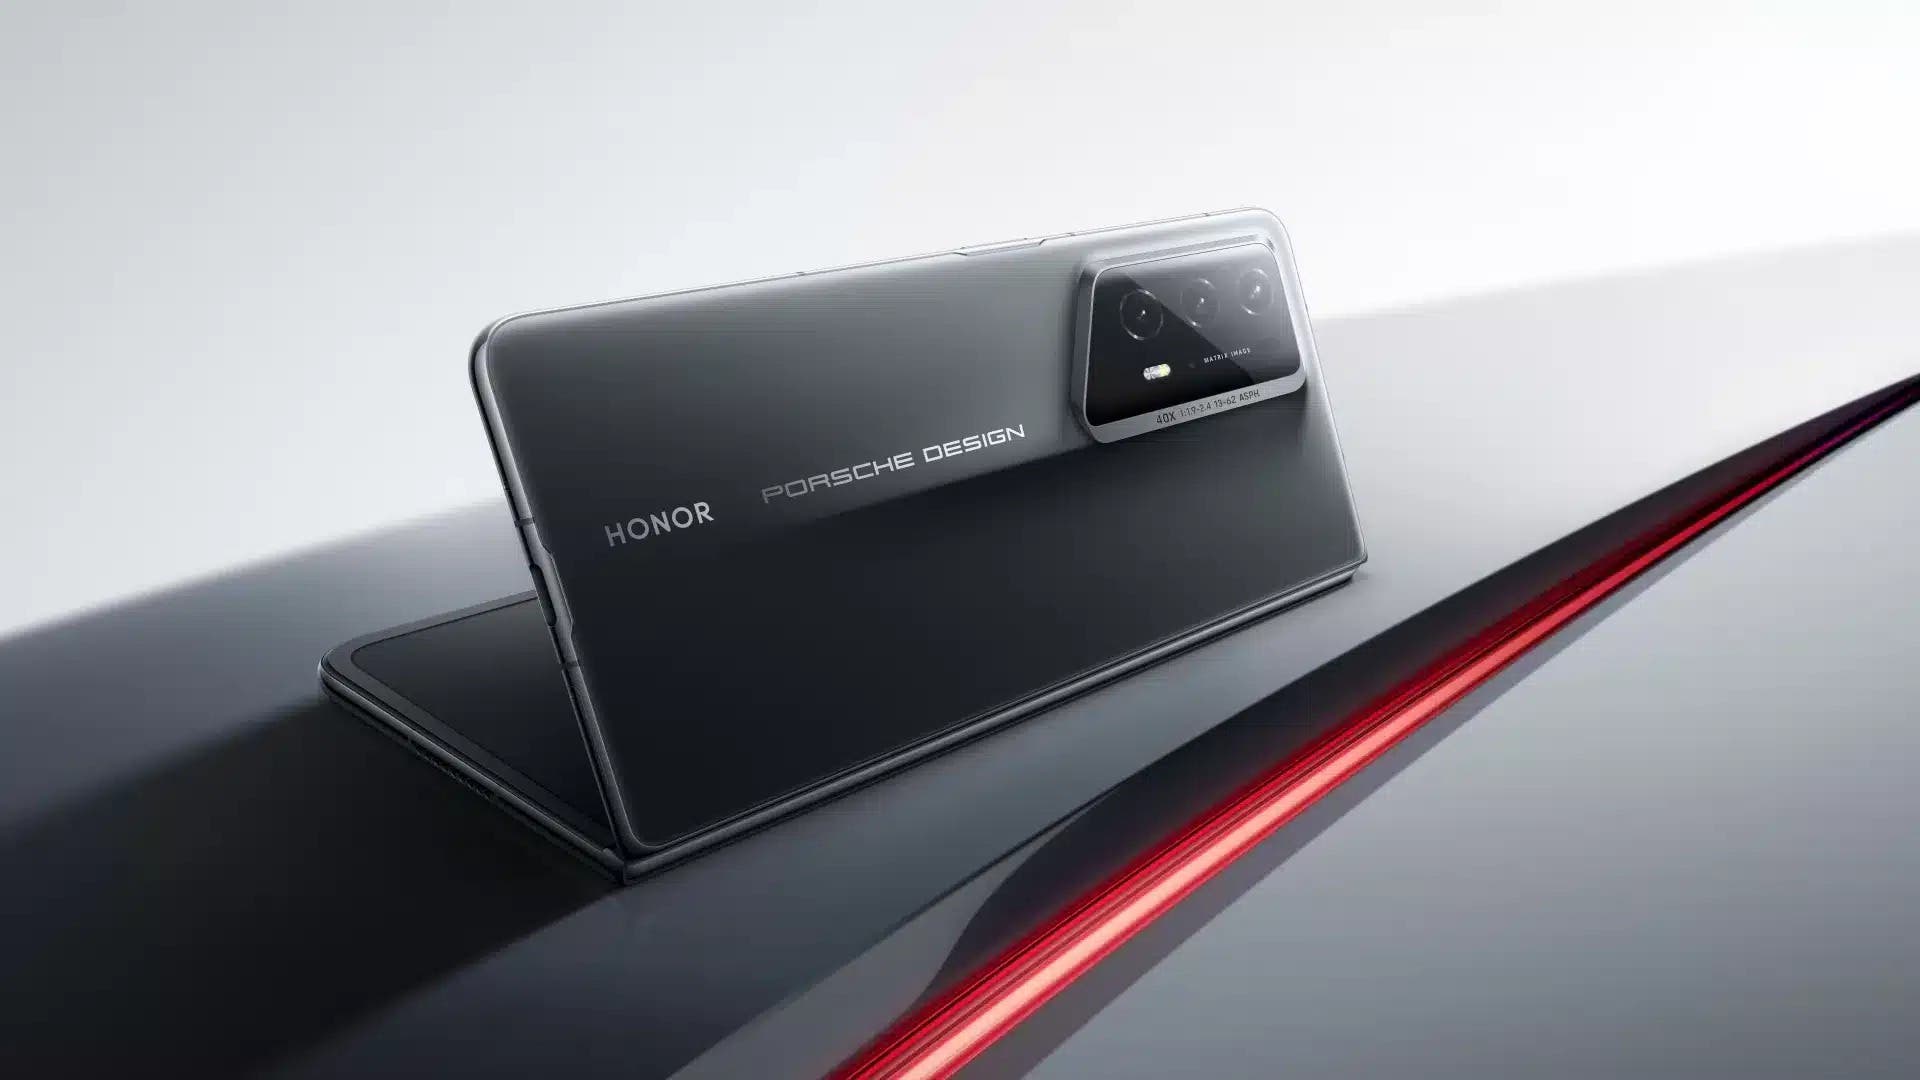 Honor Magic V2 RSR Porsche Designs premium foldbare smartphone kommer til salg i Europa for €2700 - €700 dyrere end den almindelige Magic V2